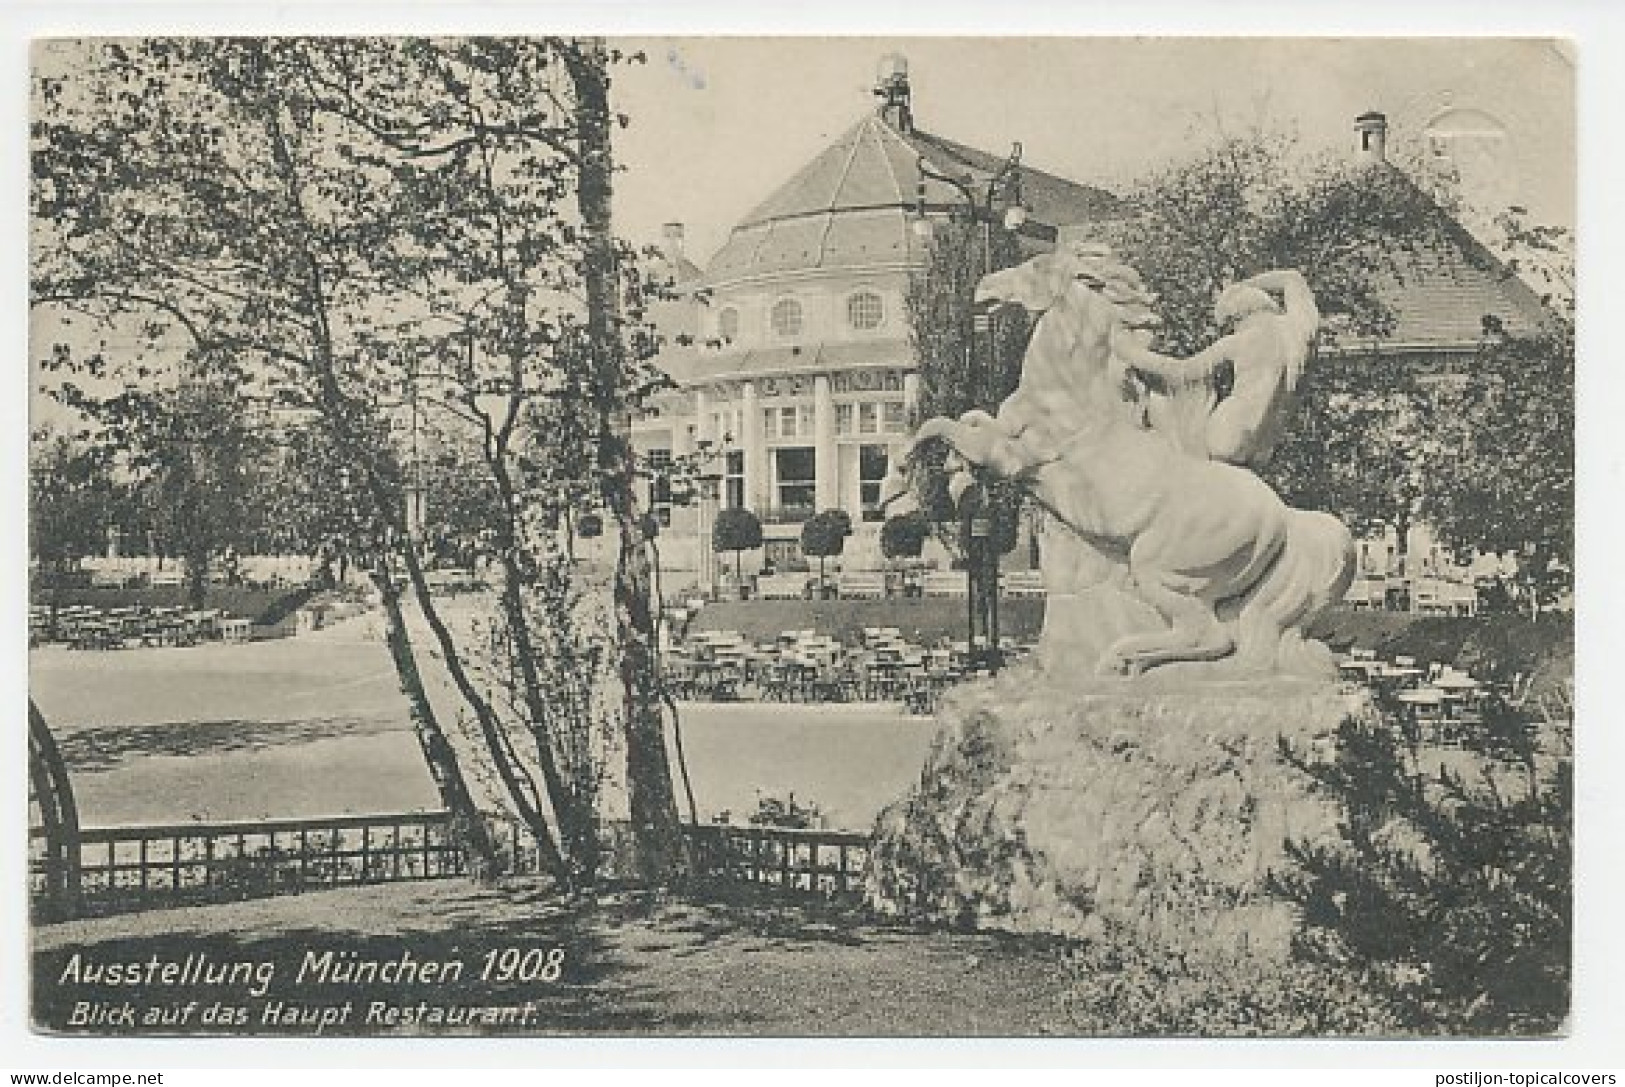 Postal Stationery Bayern 1908 Exhibition Munchen - Restaurant - Horse - Beeldhouwkunst